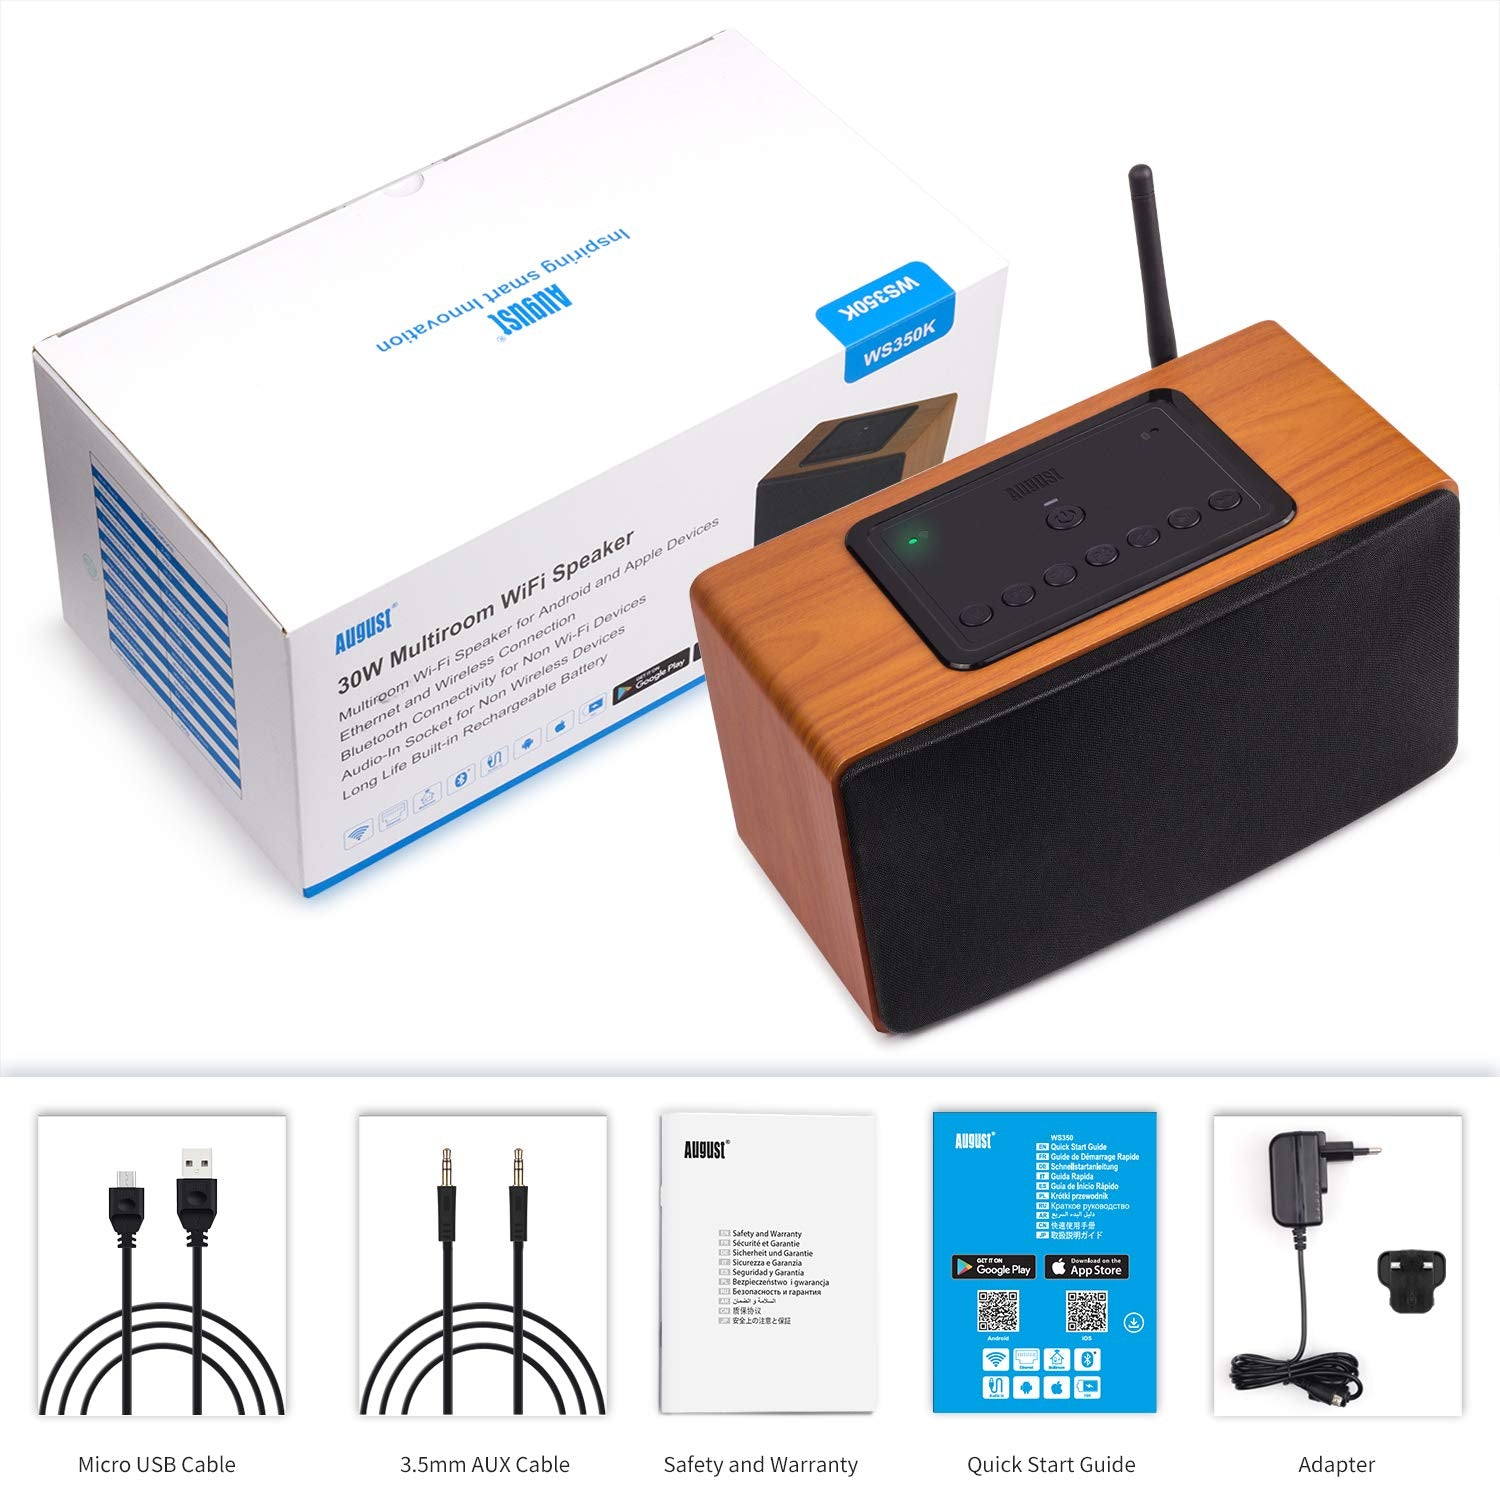 August WS350 Enceinte Multiroom Wifi et Bluetooth sans fil - Bois